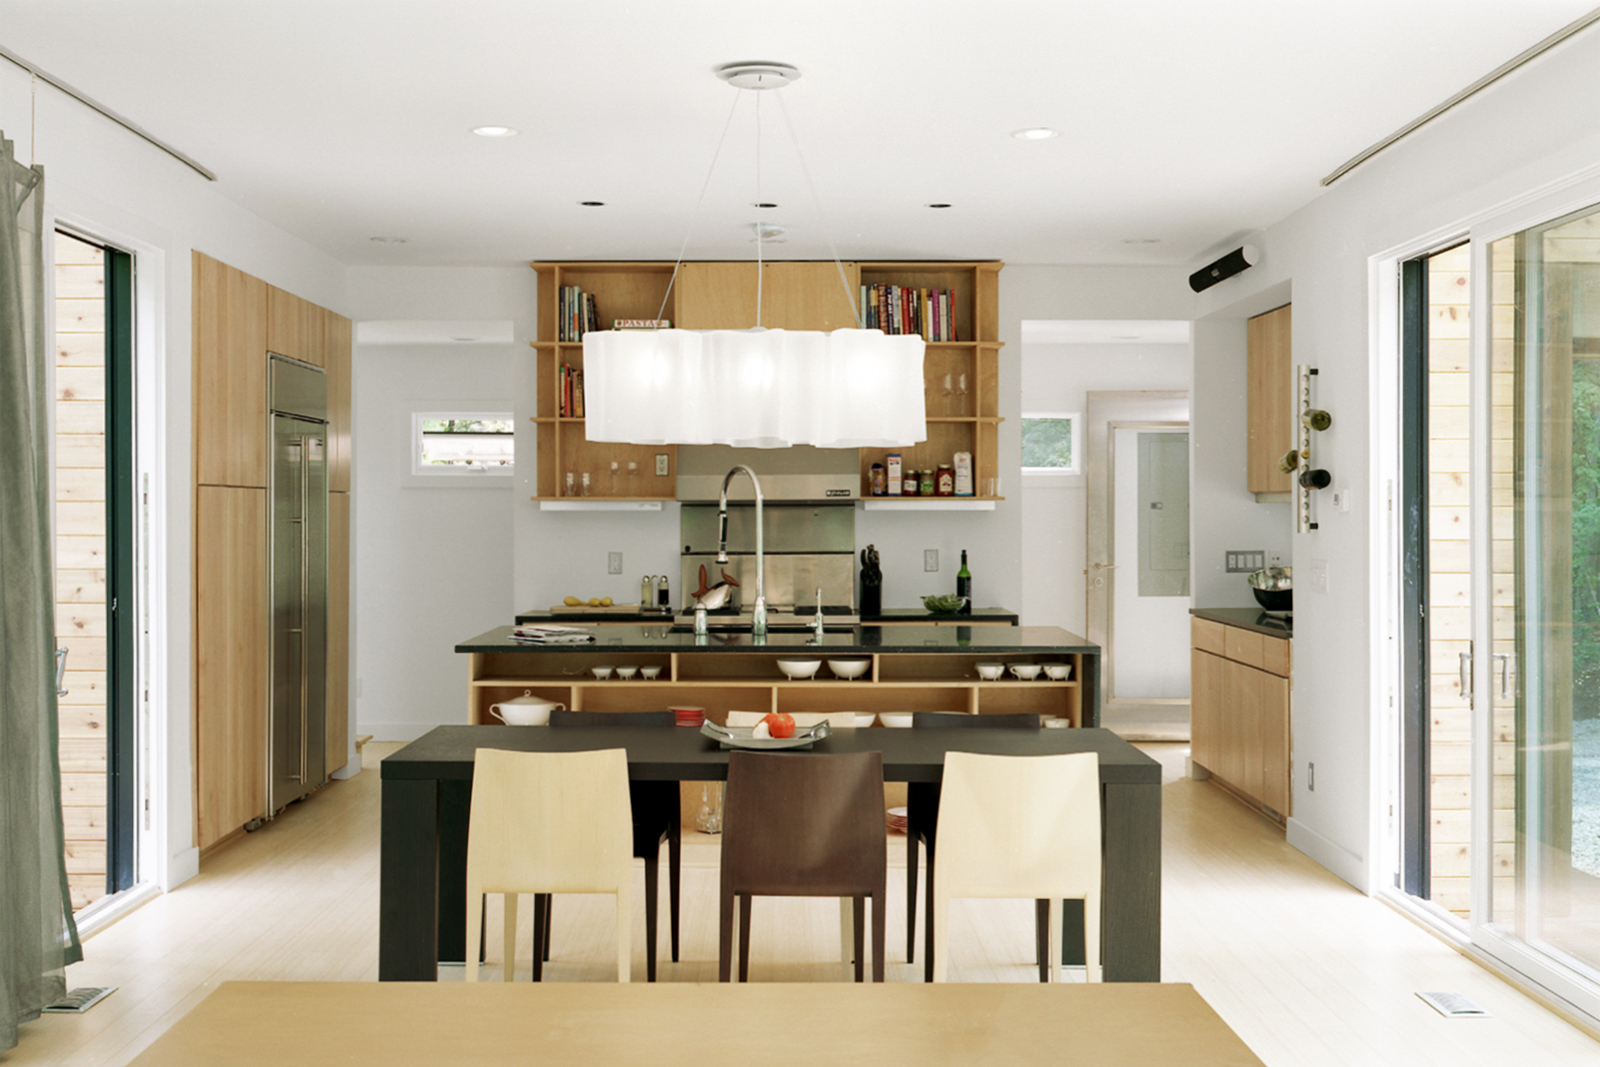 10-res4-resolution-4-architecture-modern-modular-house-prefab-dwell-home-interior-kitchen-dining.jpg